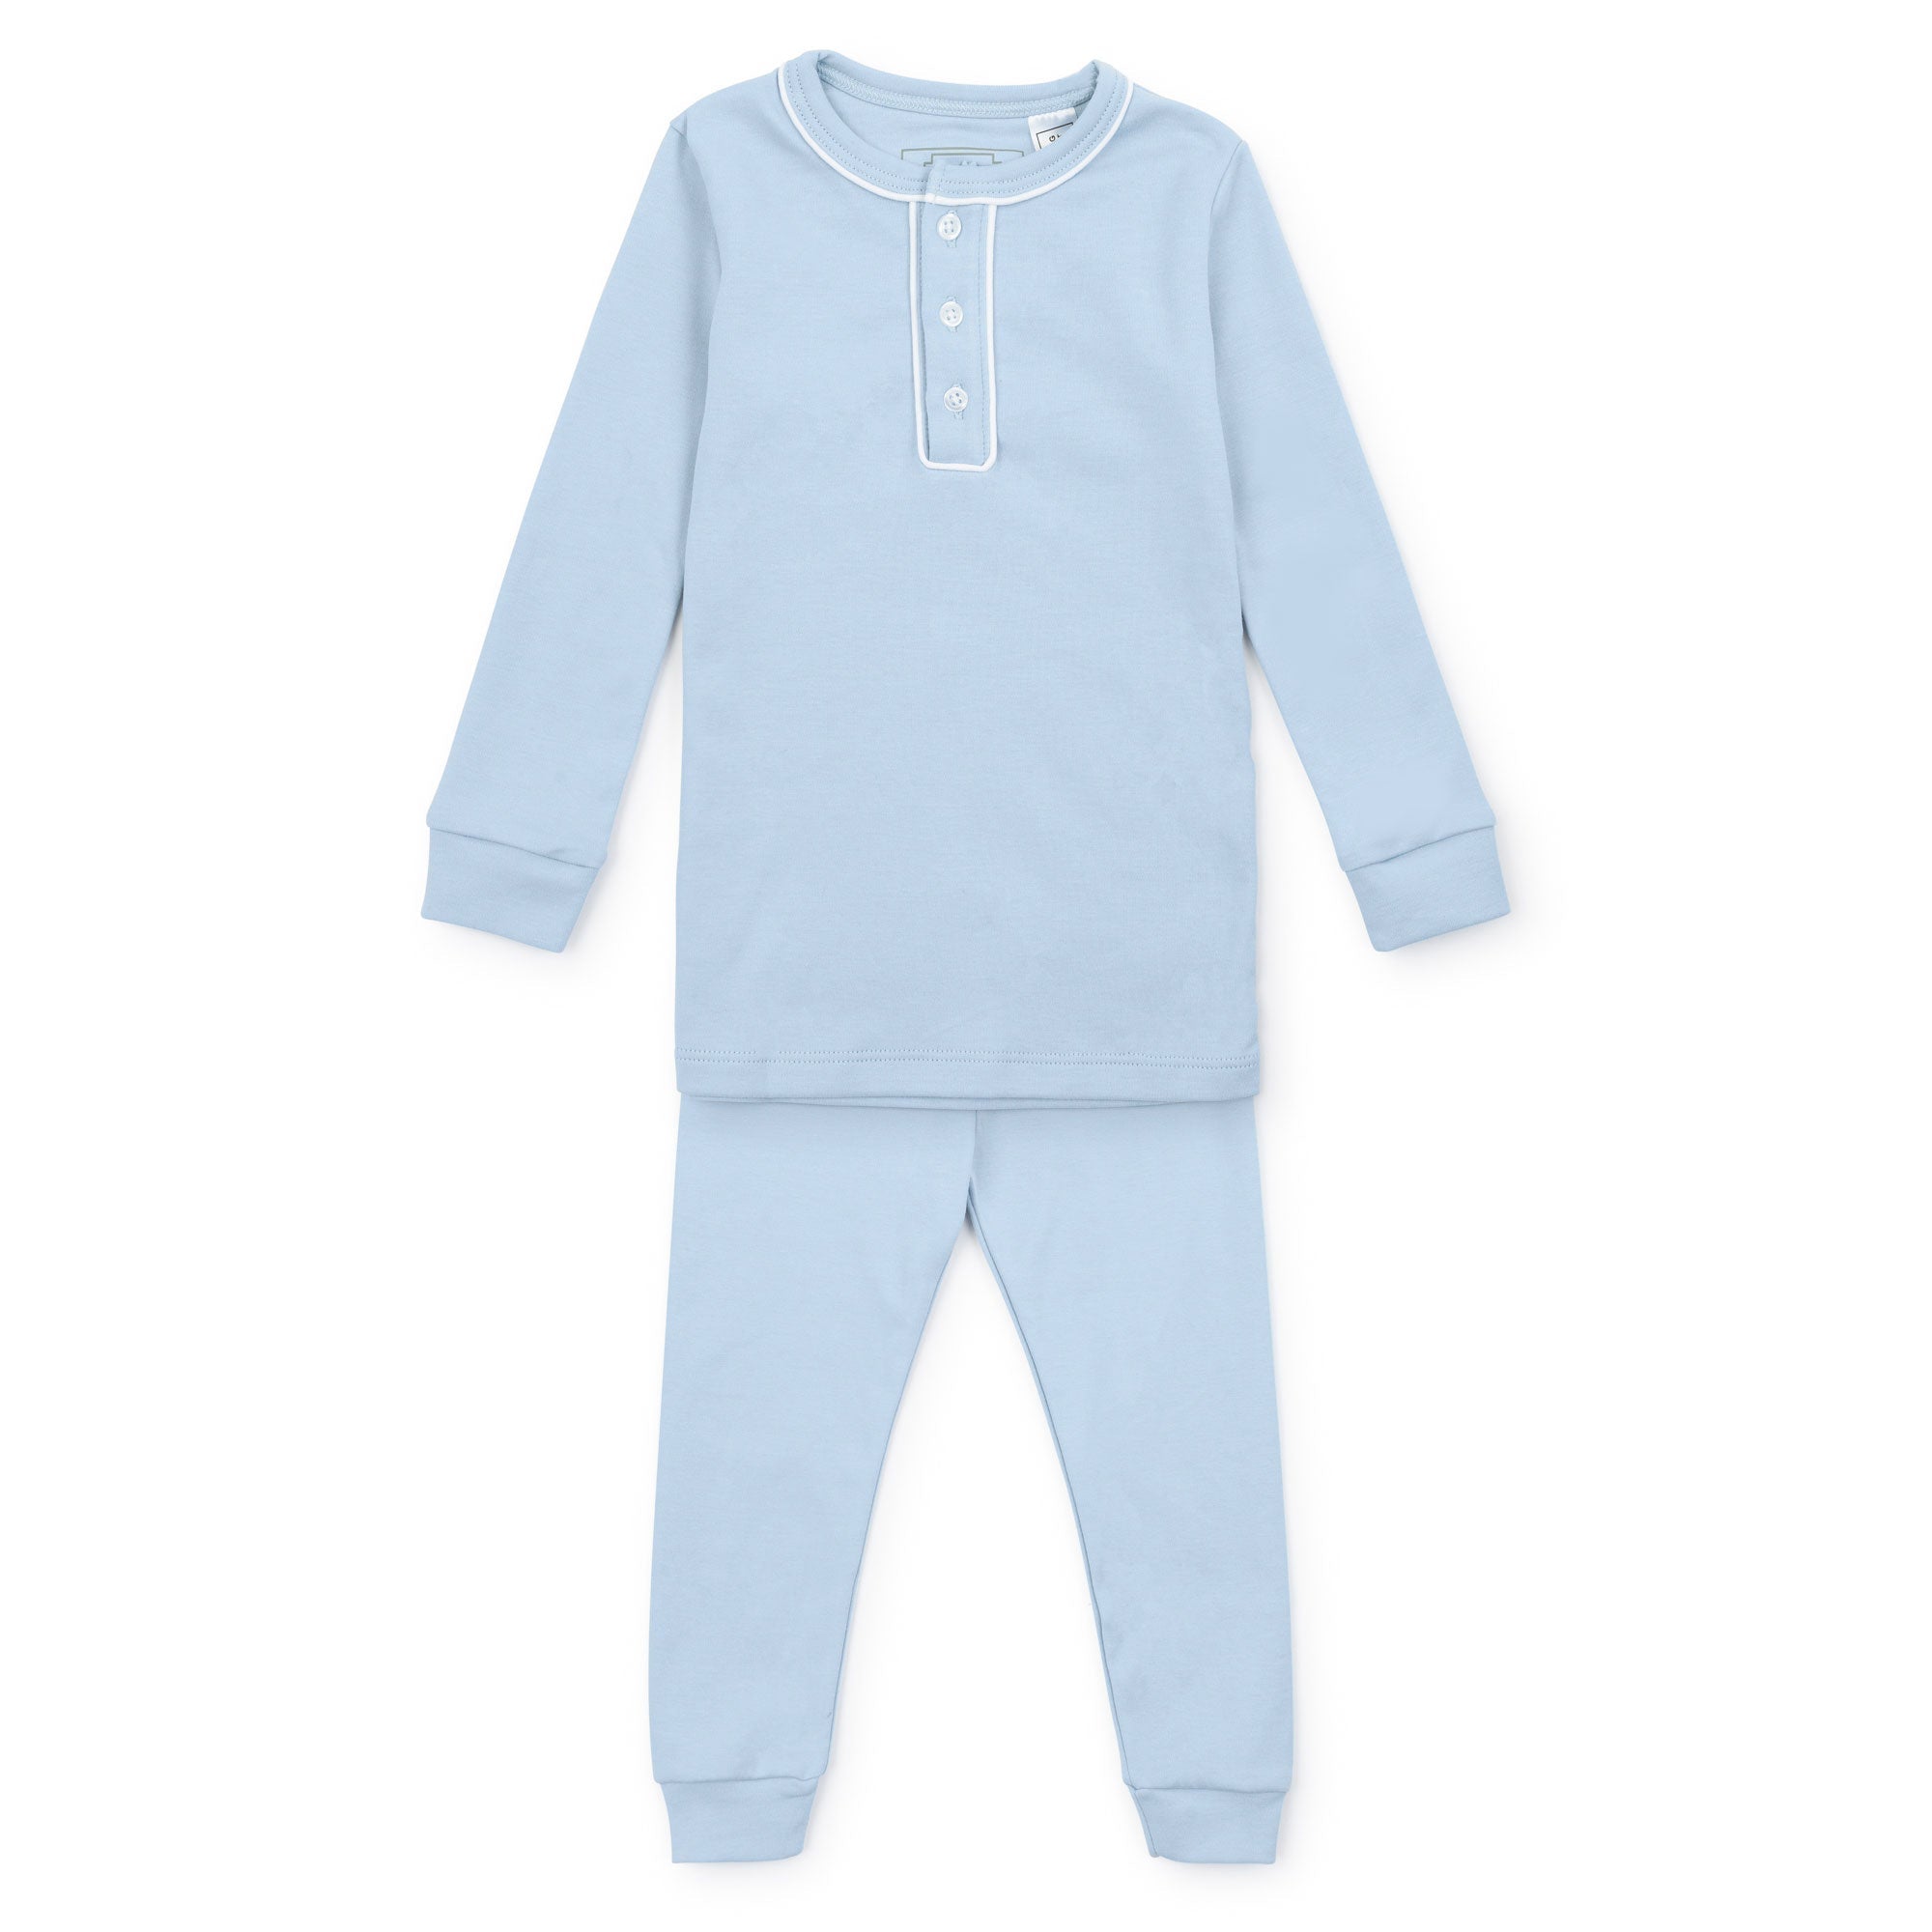 Jack Boys' Pima Cotton Pajama Pant Set - Light Blue